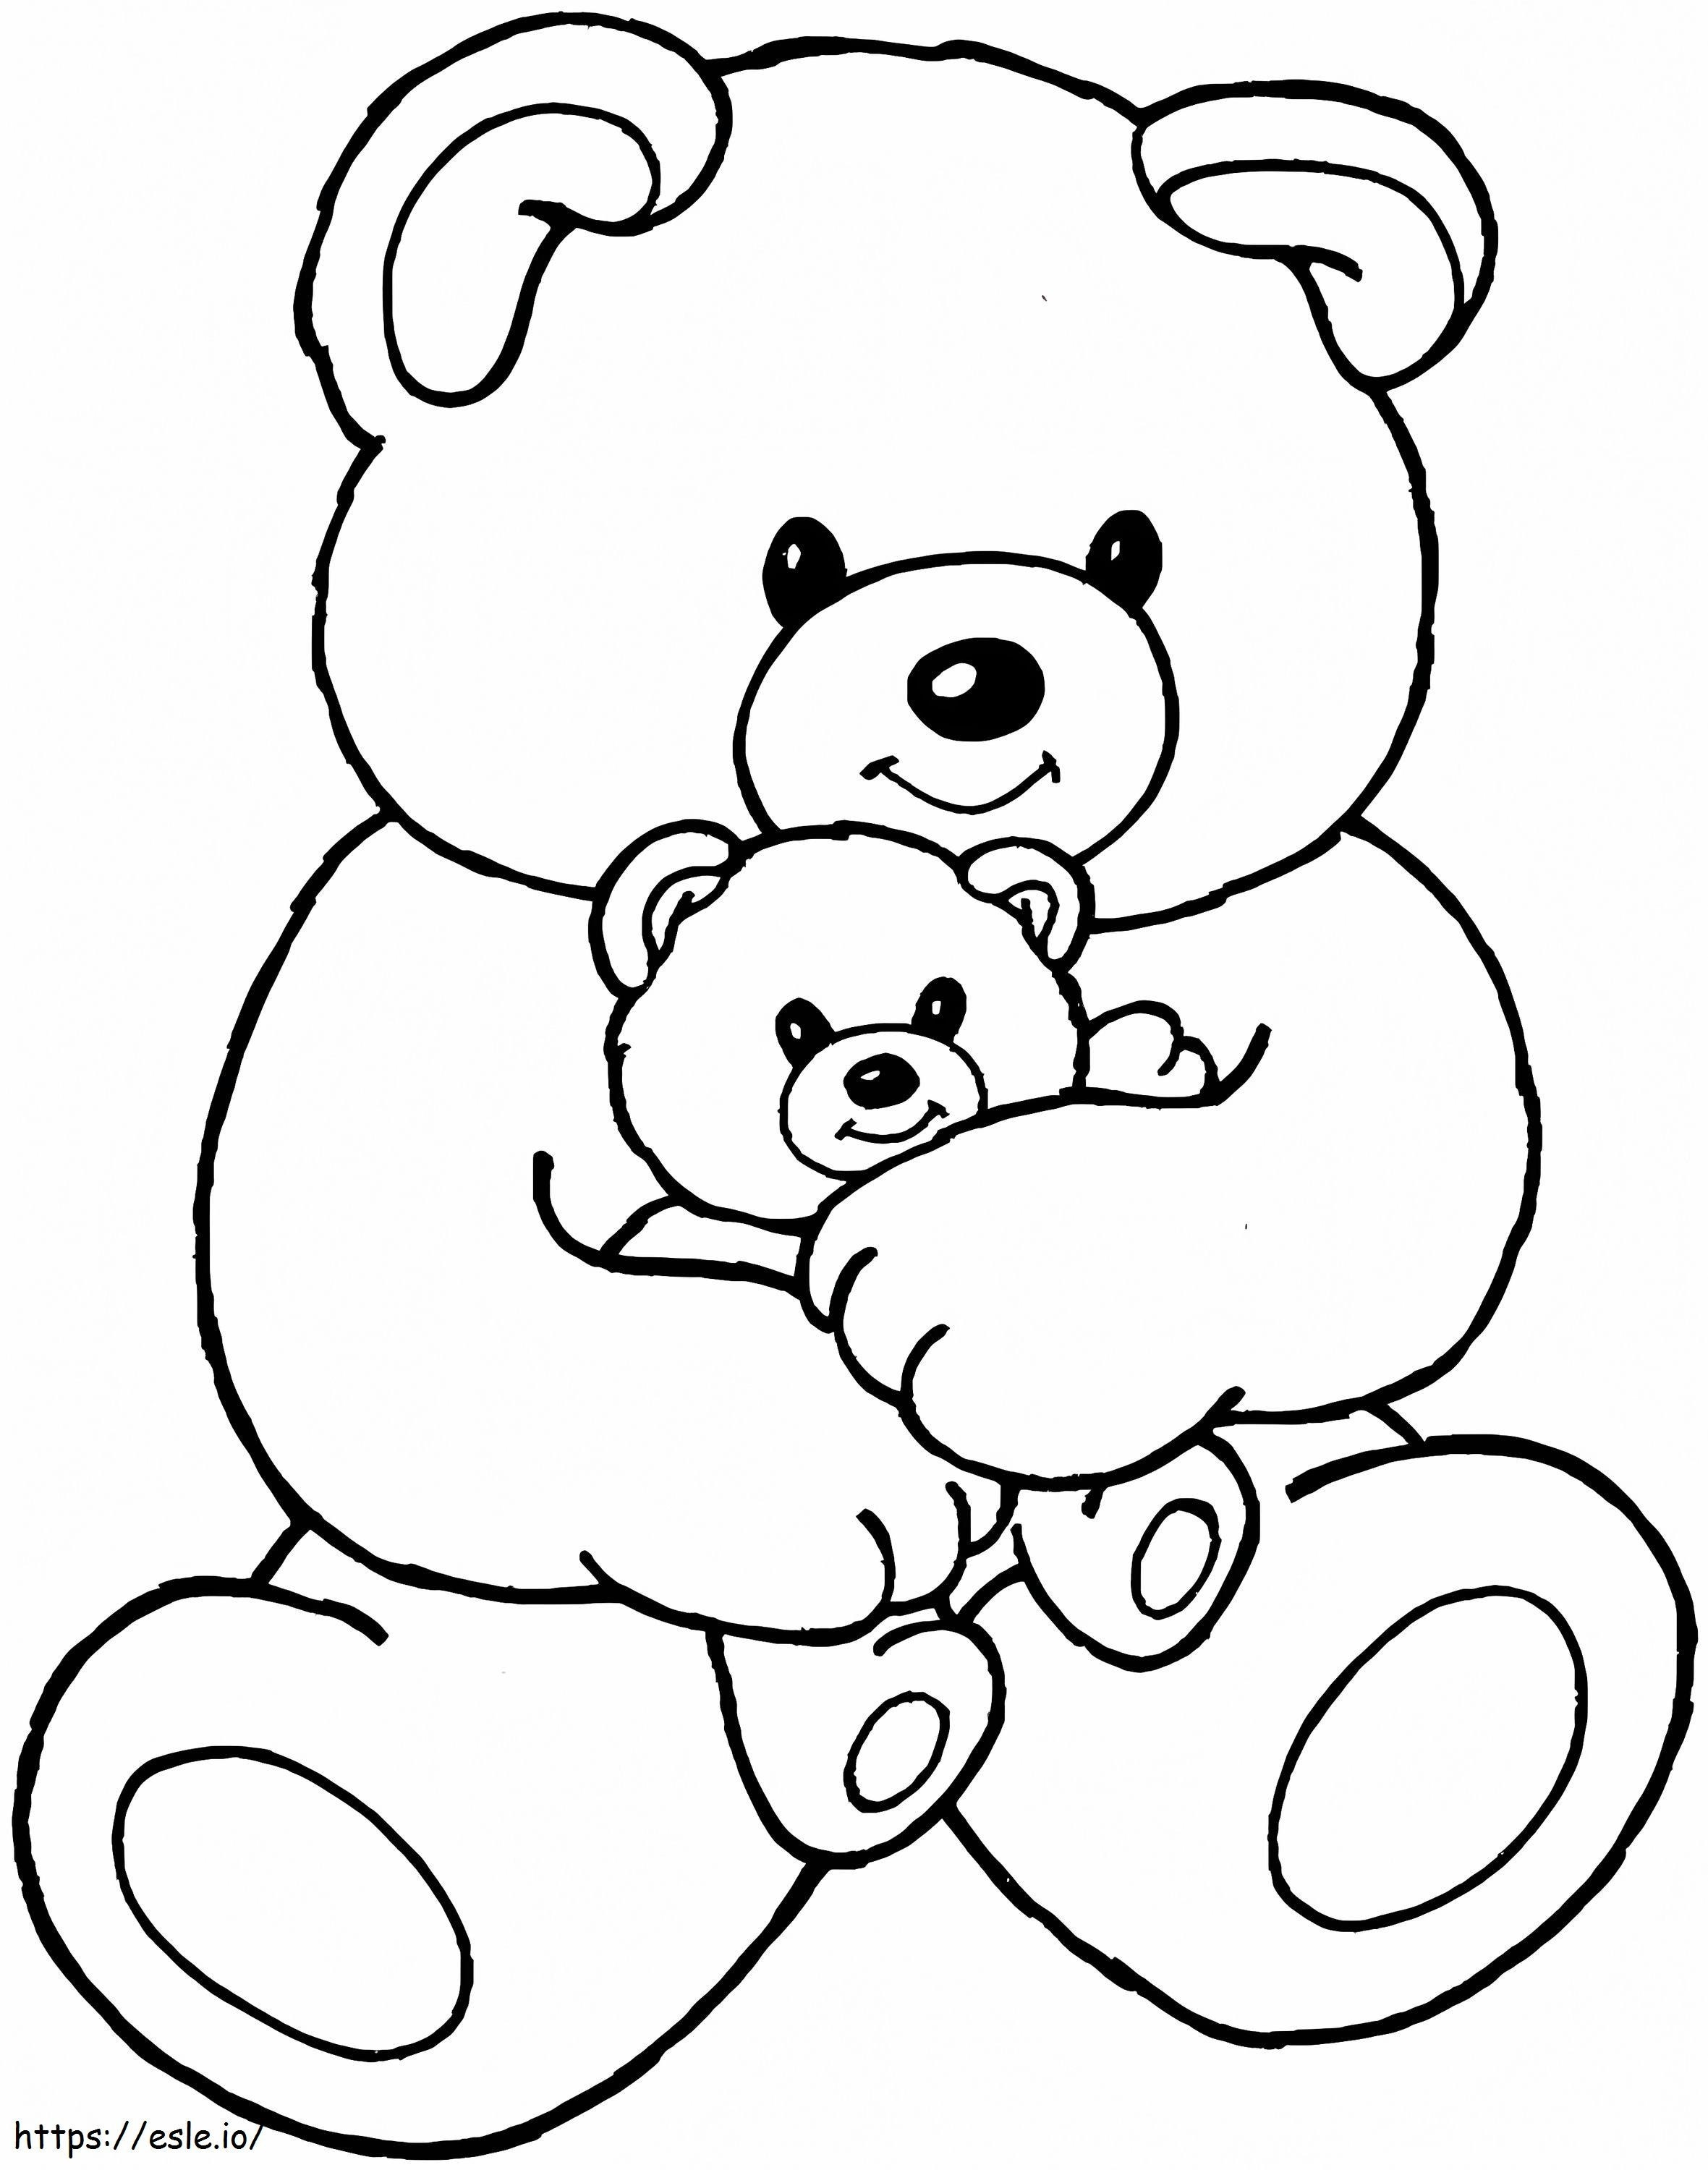 Boneka Beruang Besar Dan Kecil Gambar Mewarnai